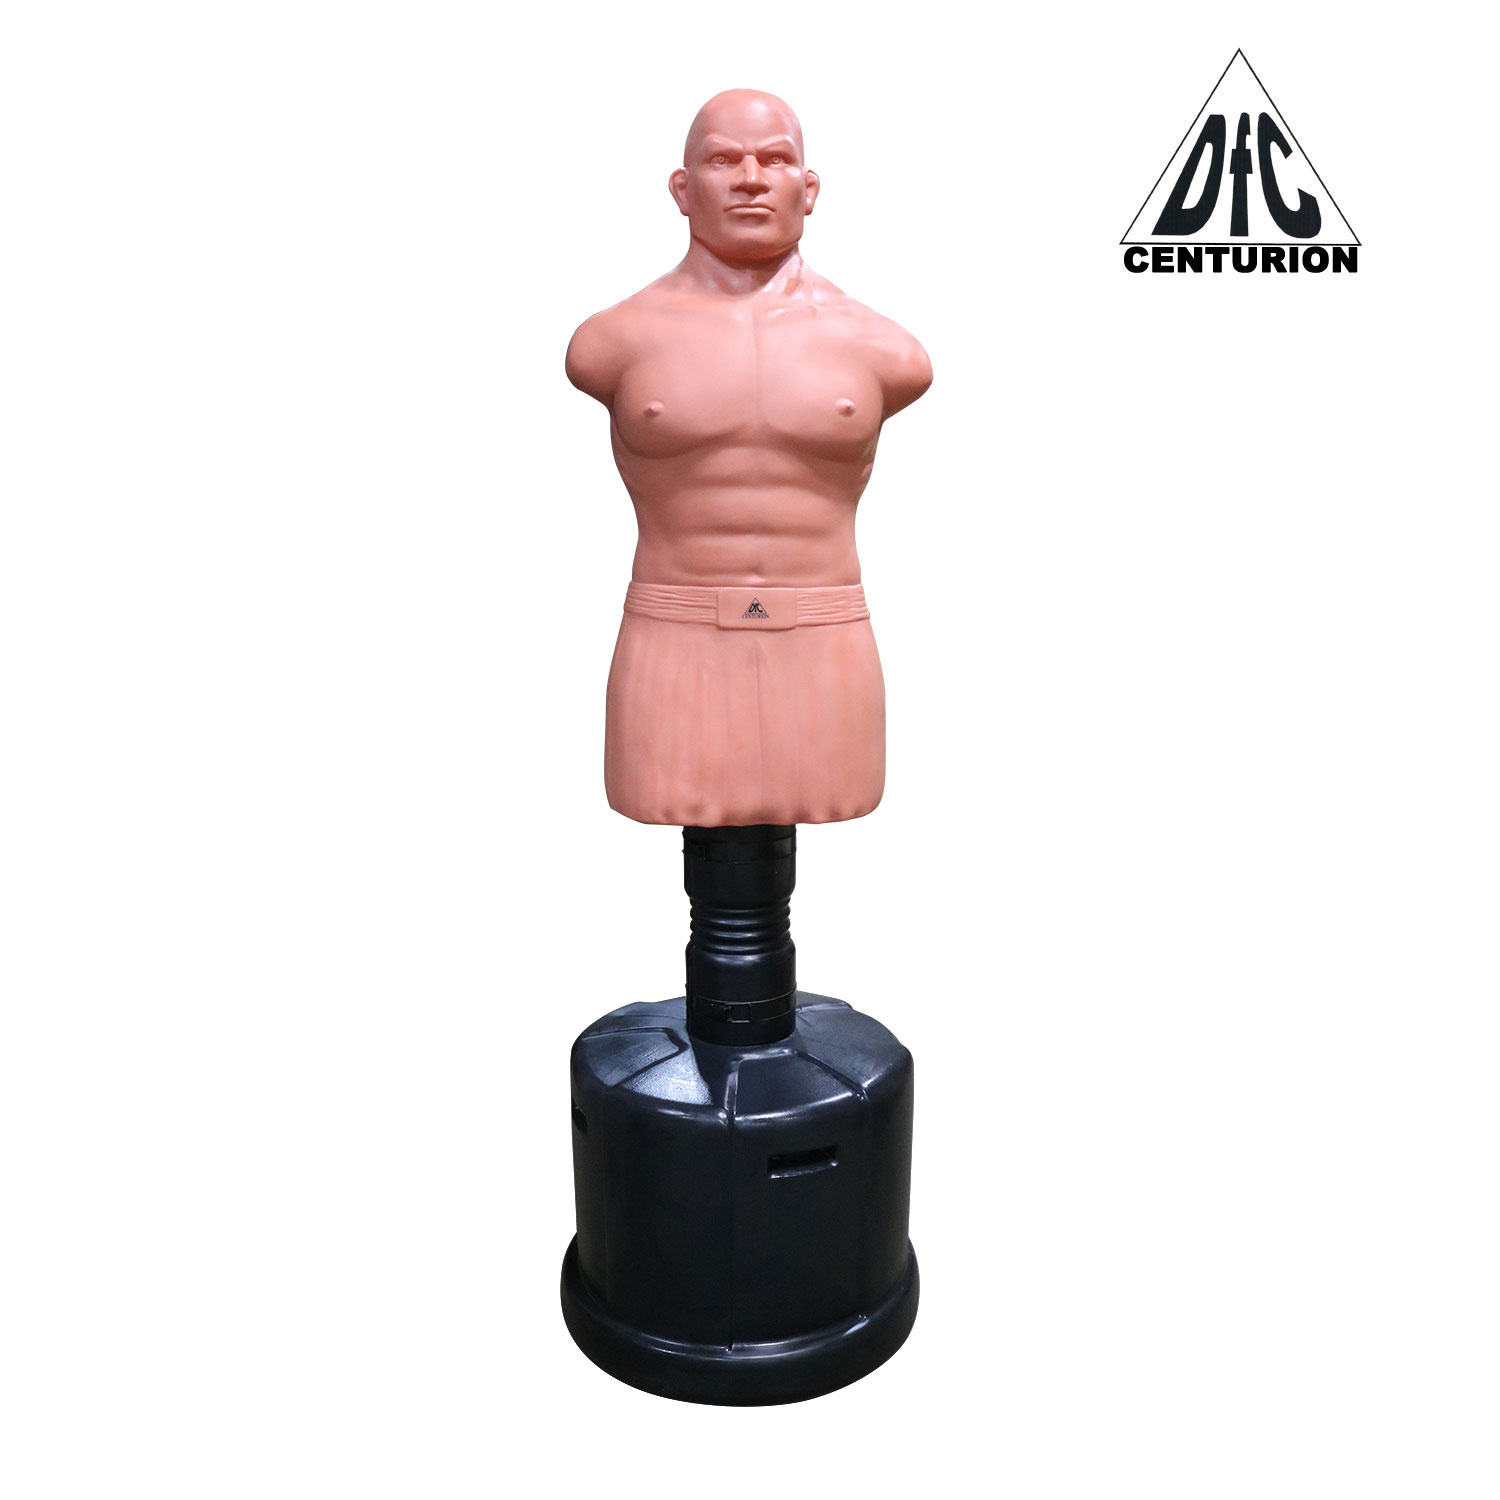 DFC Centurion Boxing Punching Man-Heavy водоналивной - бежевый из каталога манекенов для бокса в Омске по цене 43990 ₽